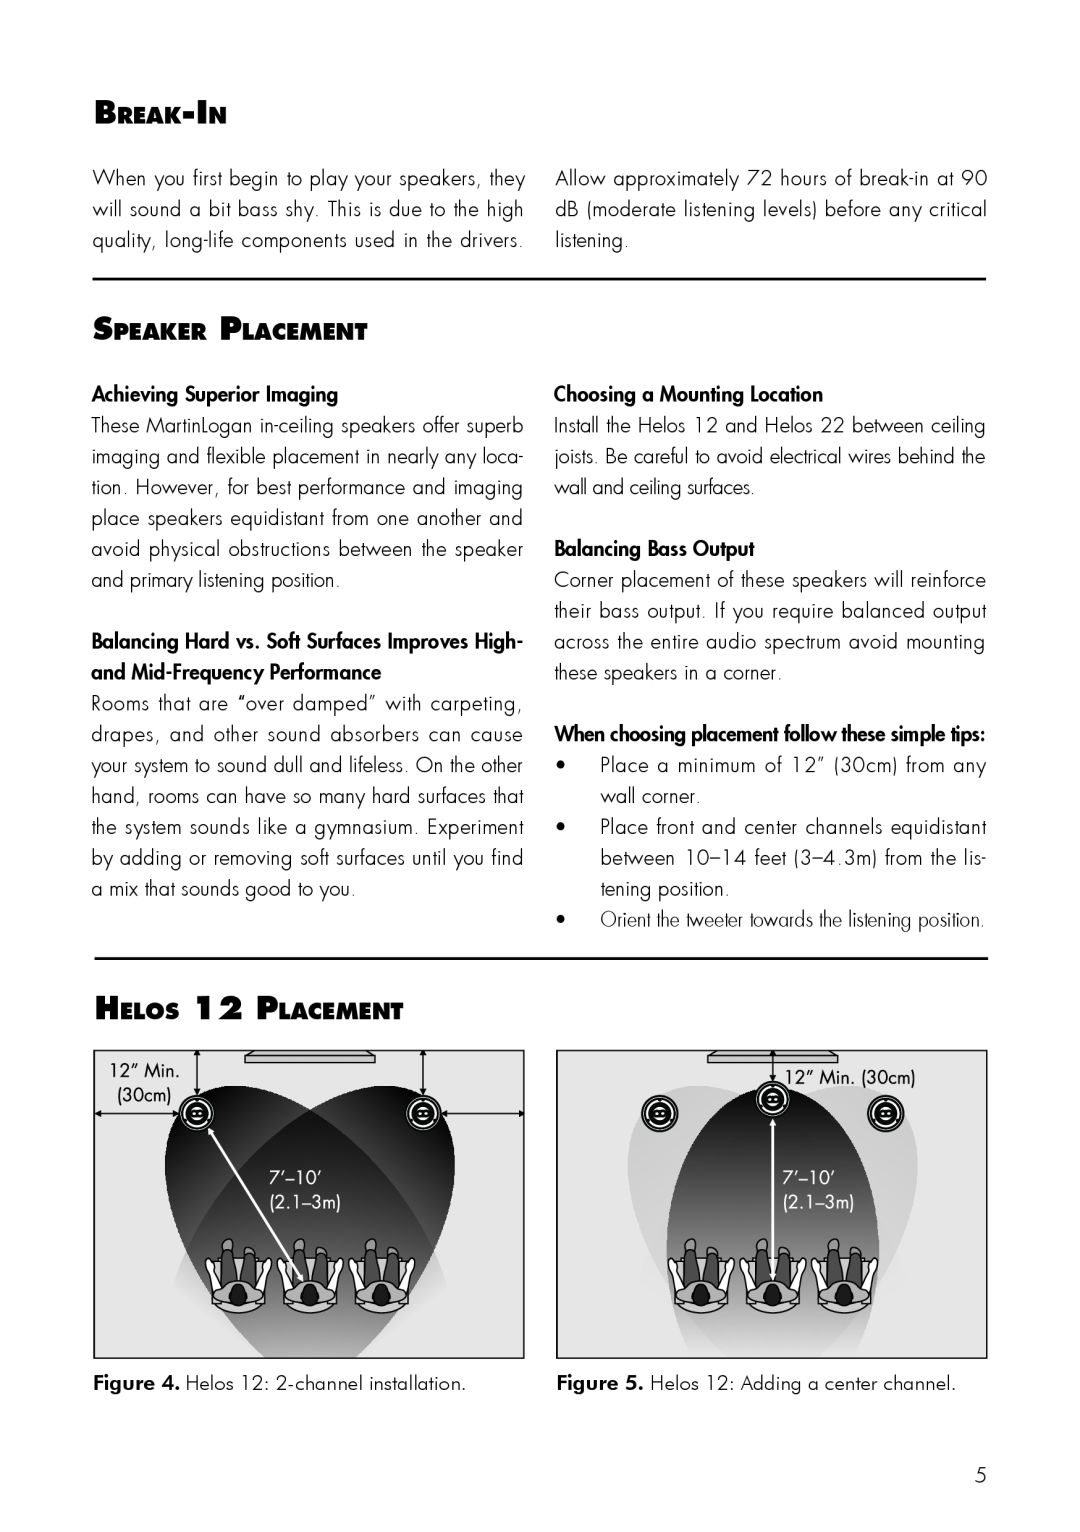 MartinLogan 22 user manual Break-In, Speaker Placement, Helos 12 Placement 